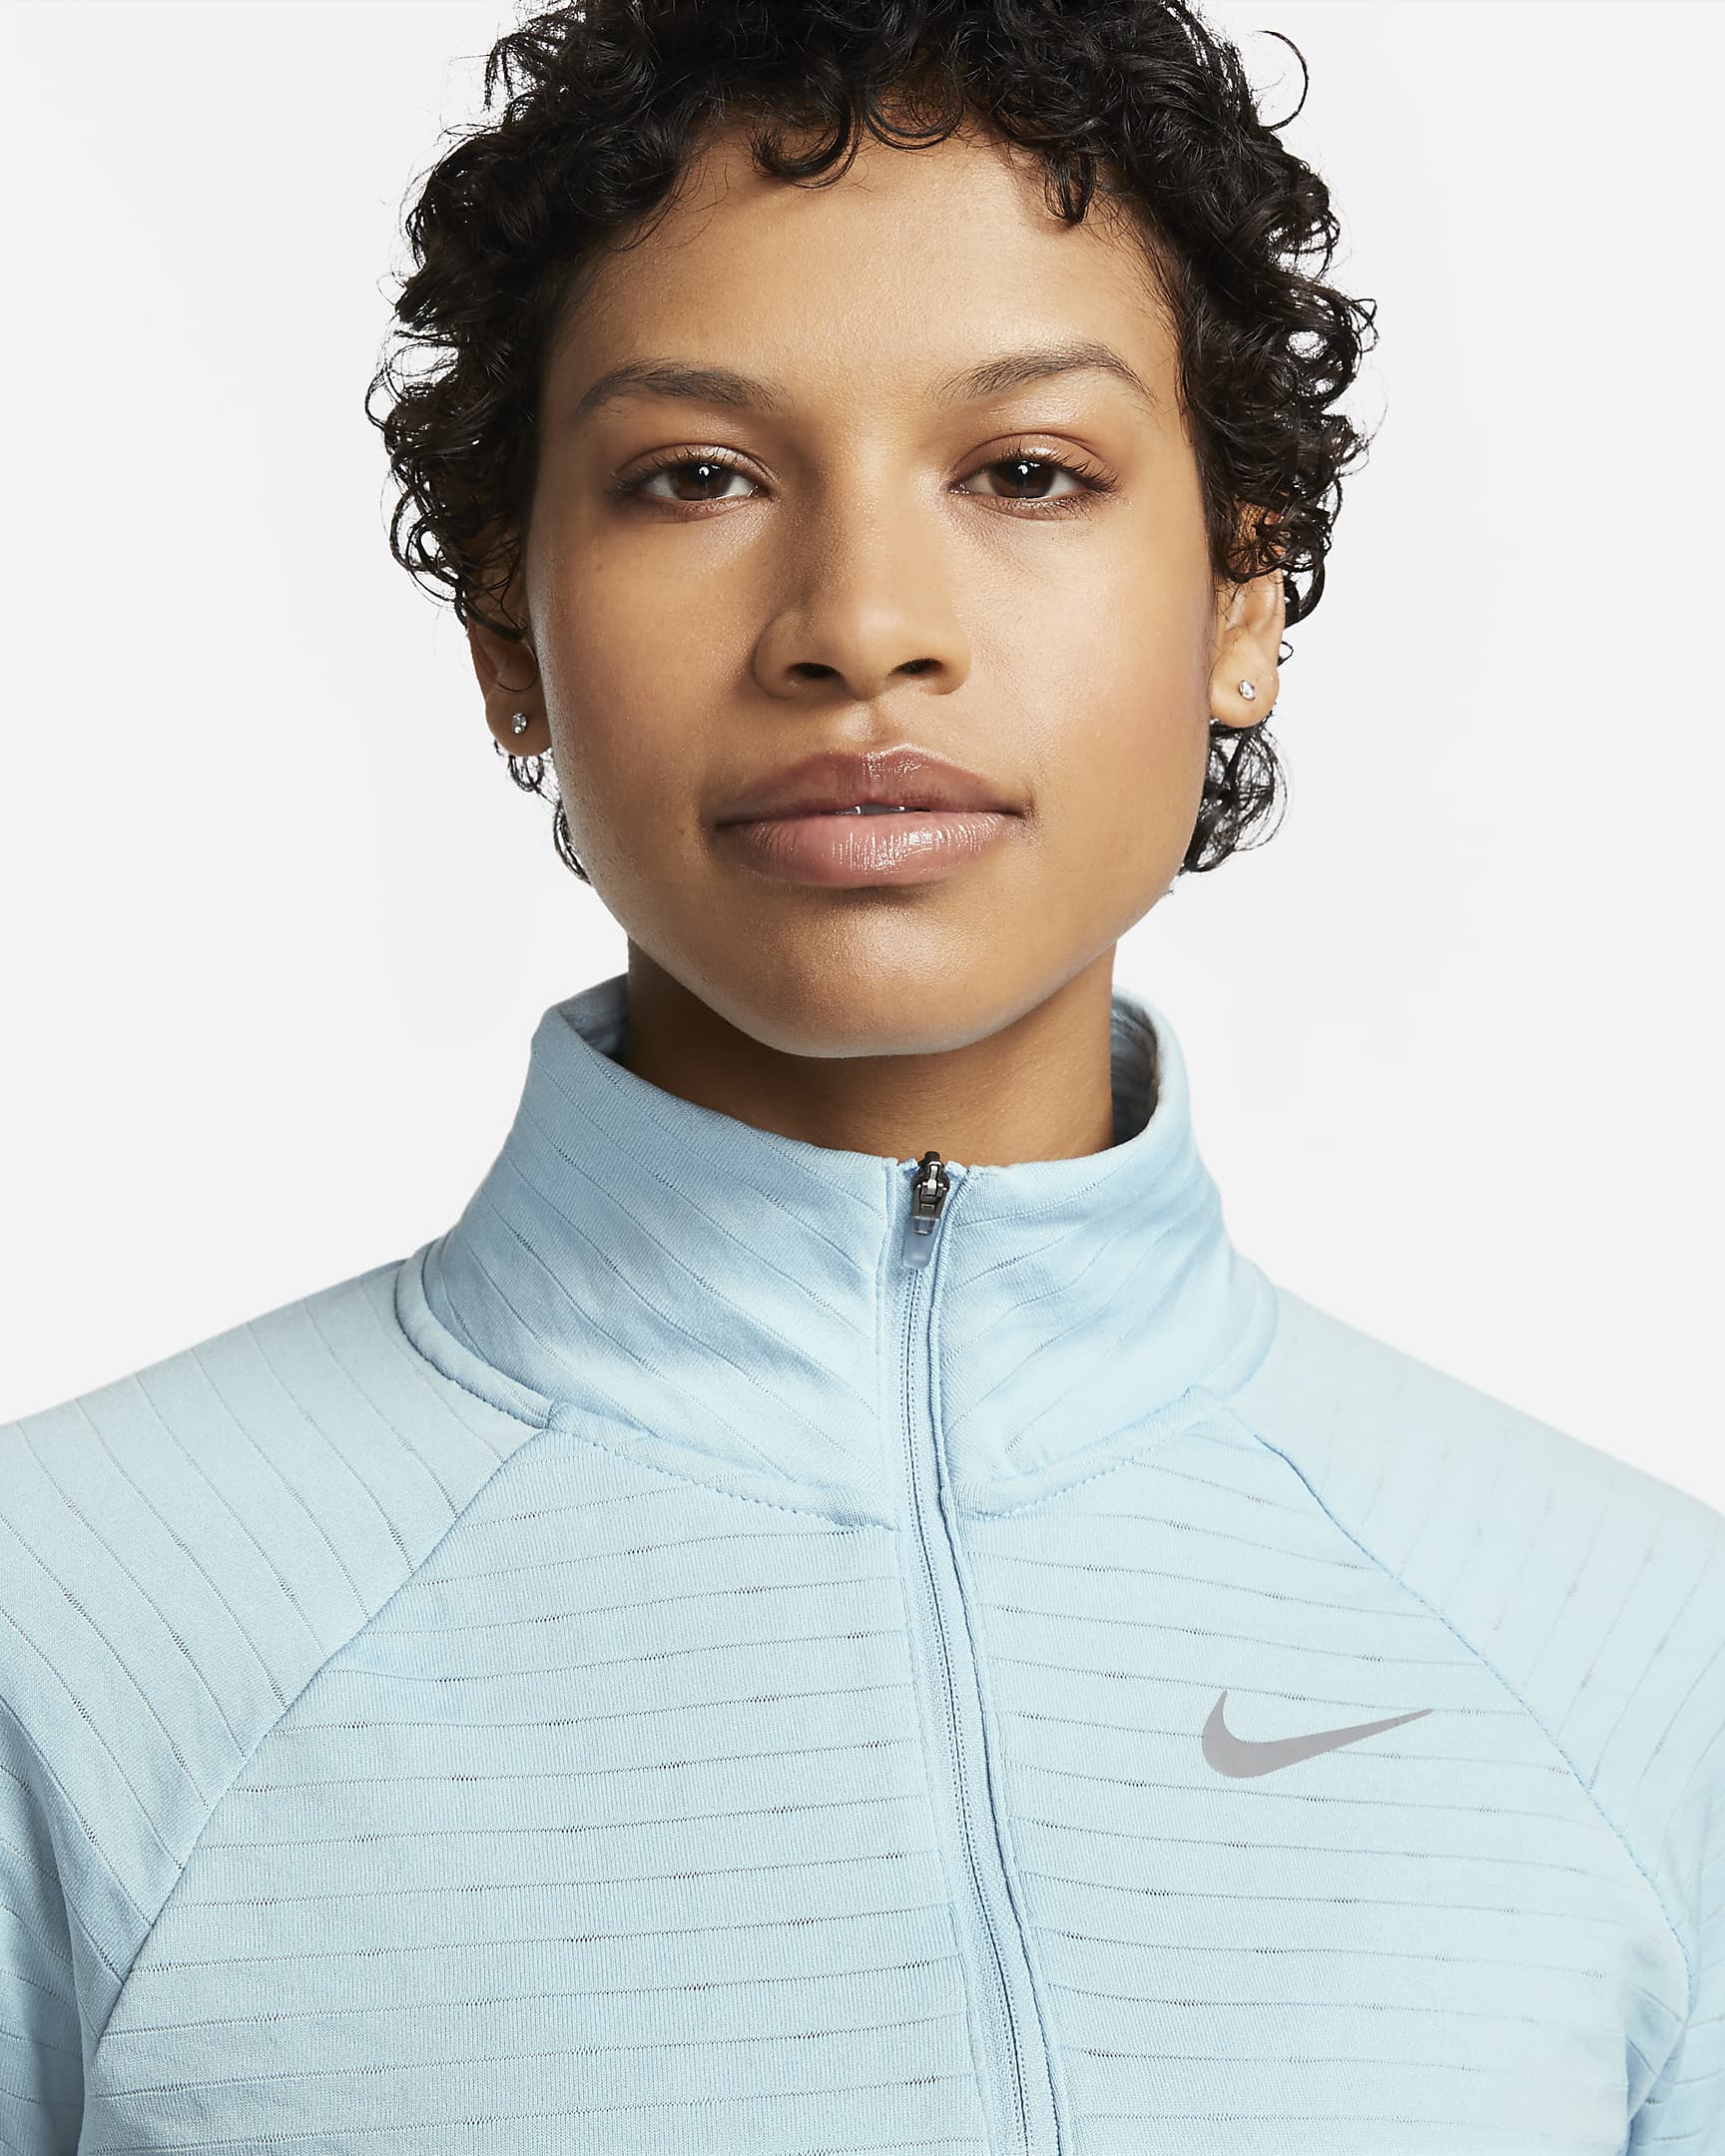 Nike Therma-FIT Women's 1/2-Zip Running Top. Nike AU